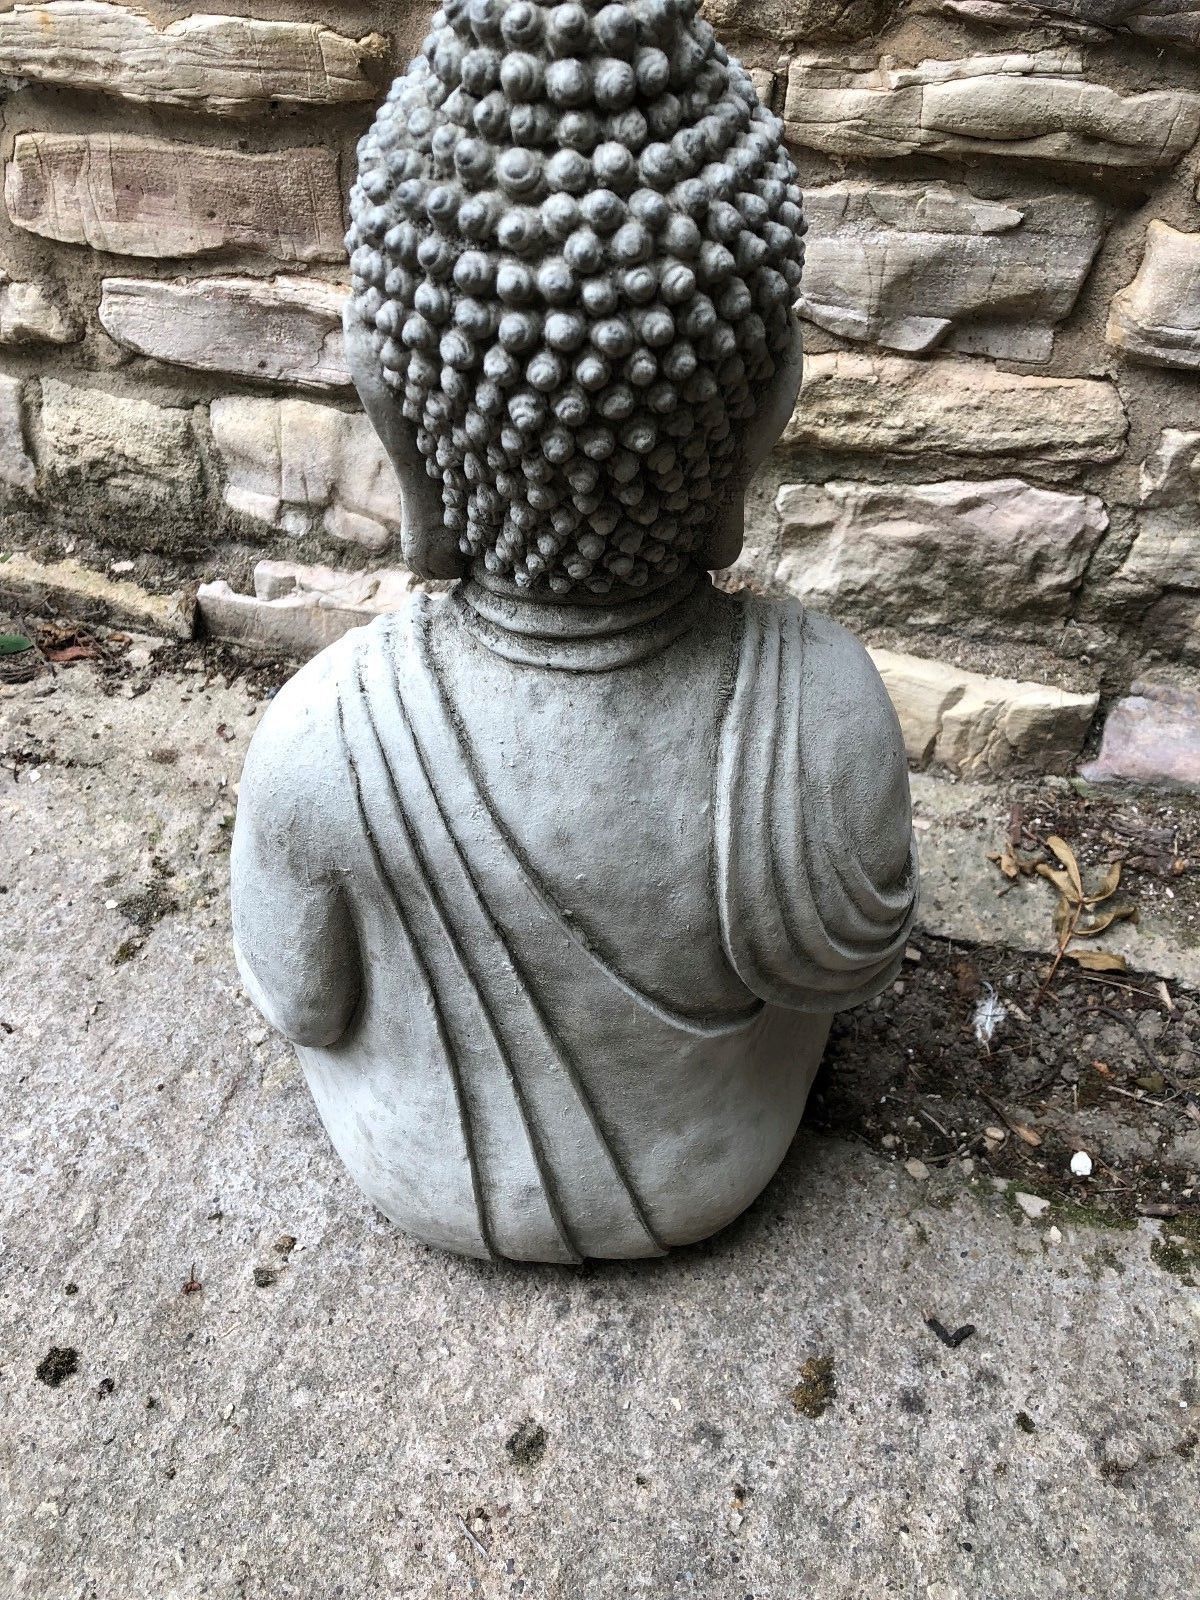 Stunning Stone Sitting Buddha Sculpture Garden Ornament